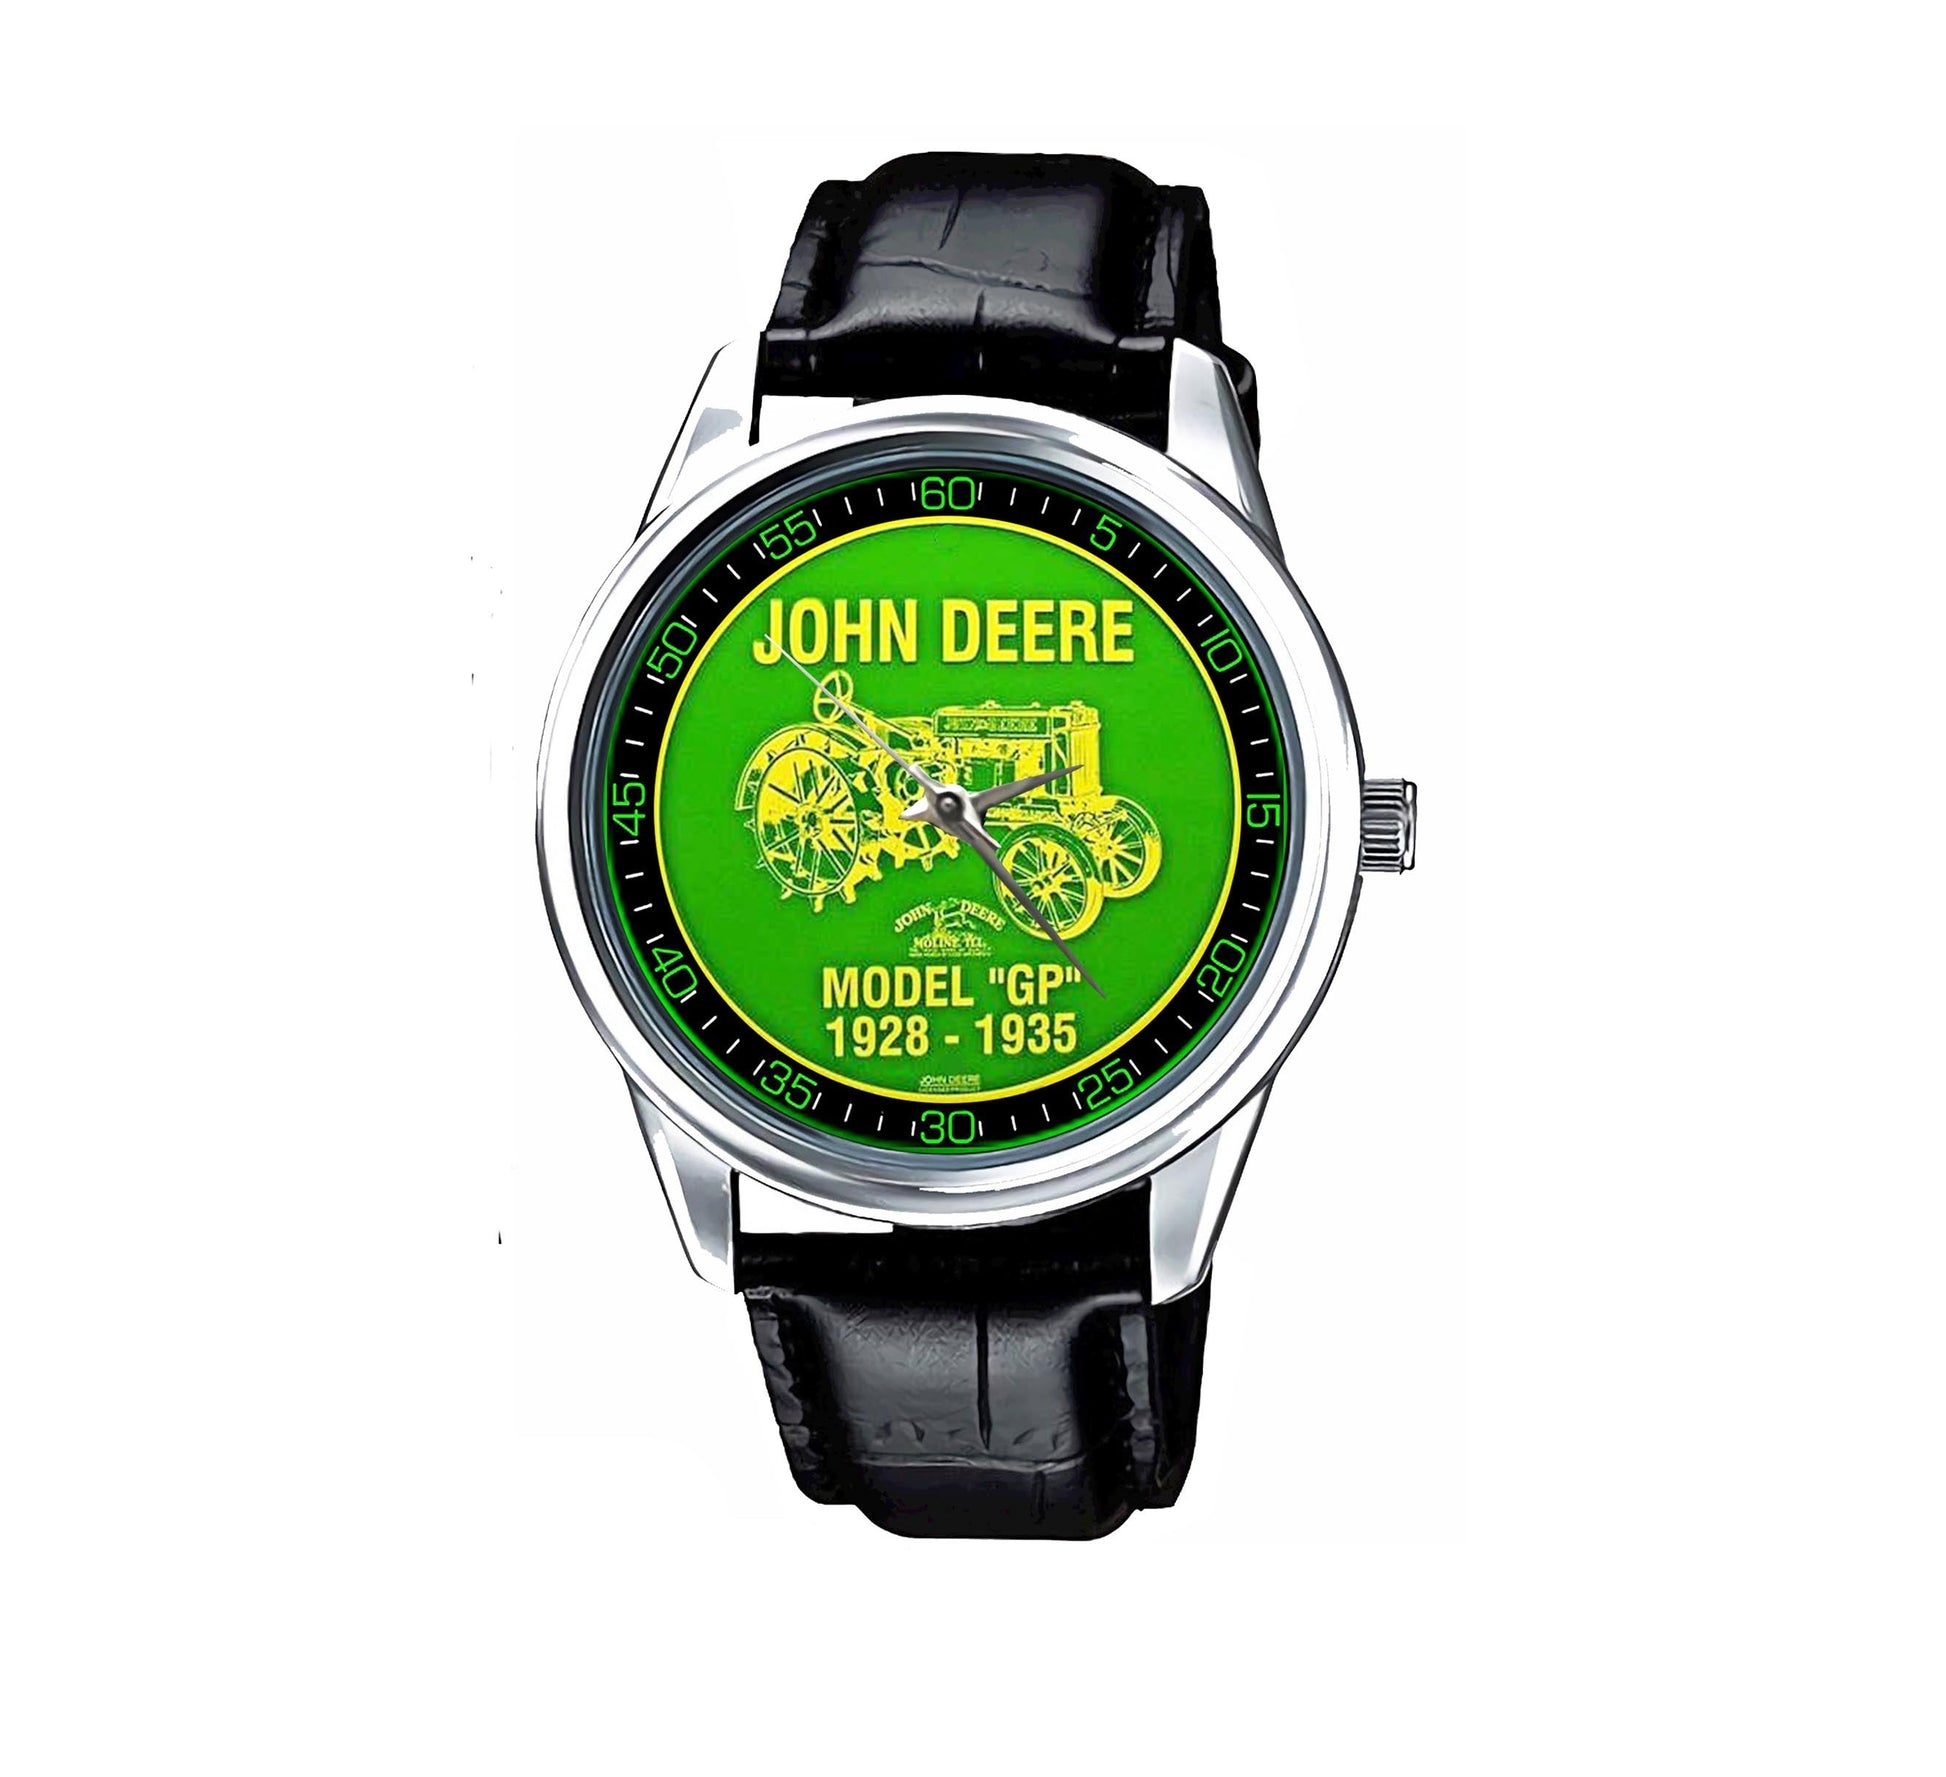 John Deere Watches bdk15